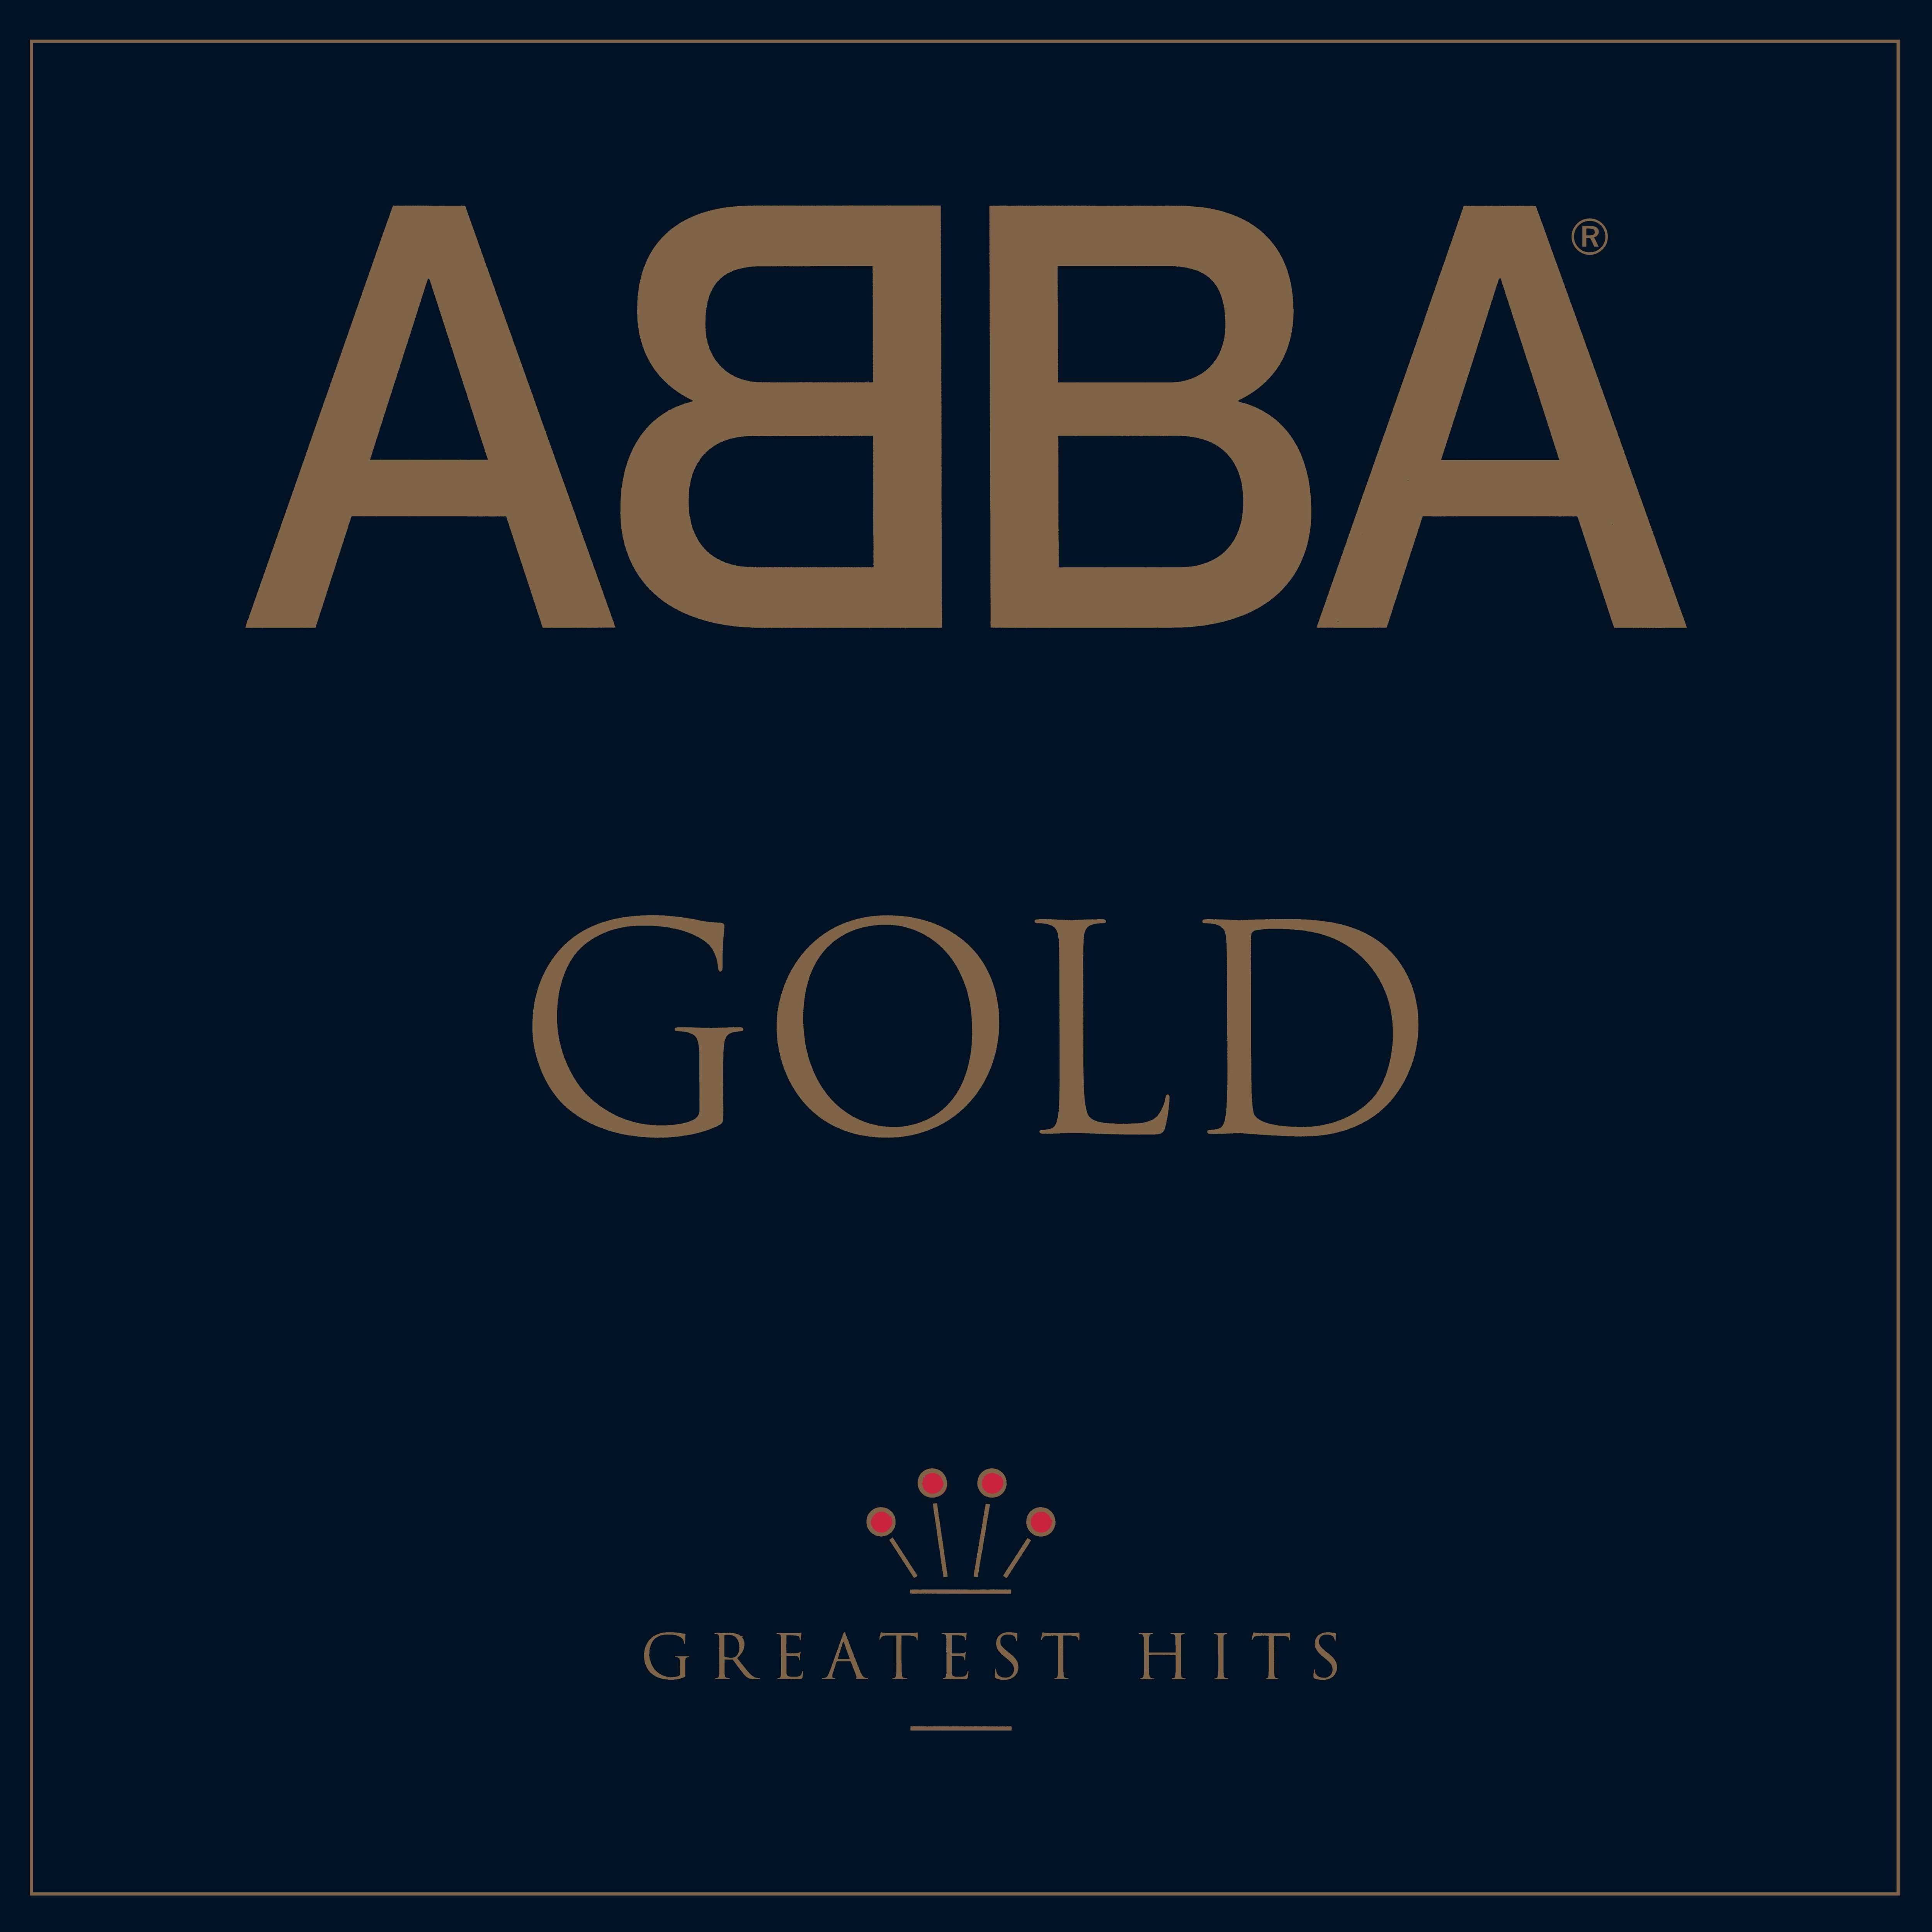 Abba - Gold Greatest Hits [Gold Vinyl]